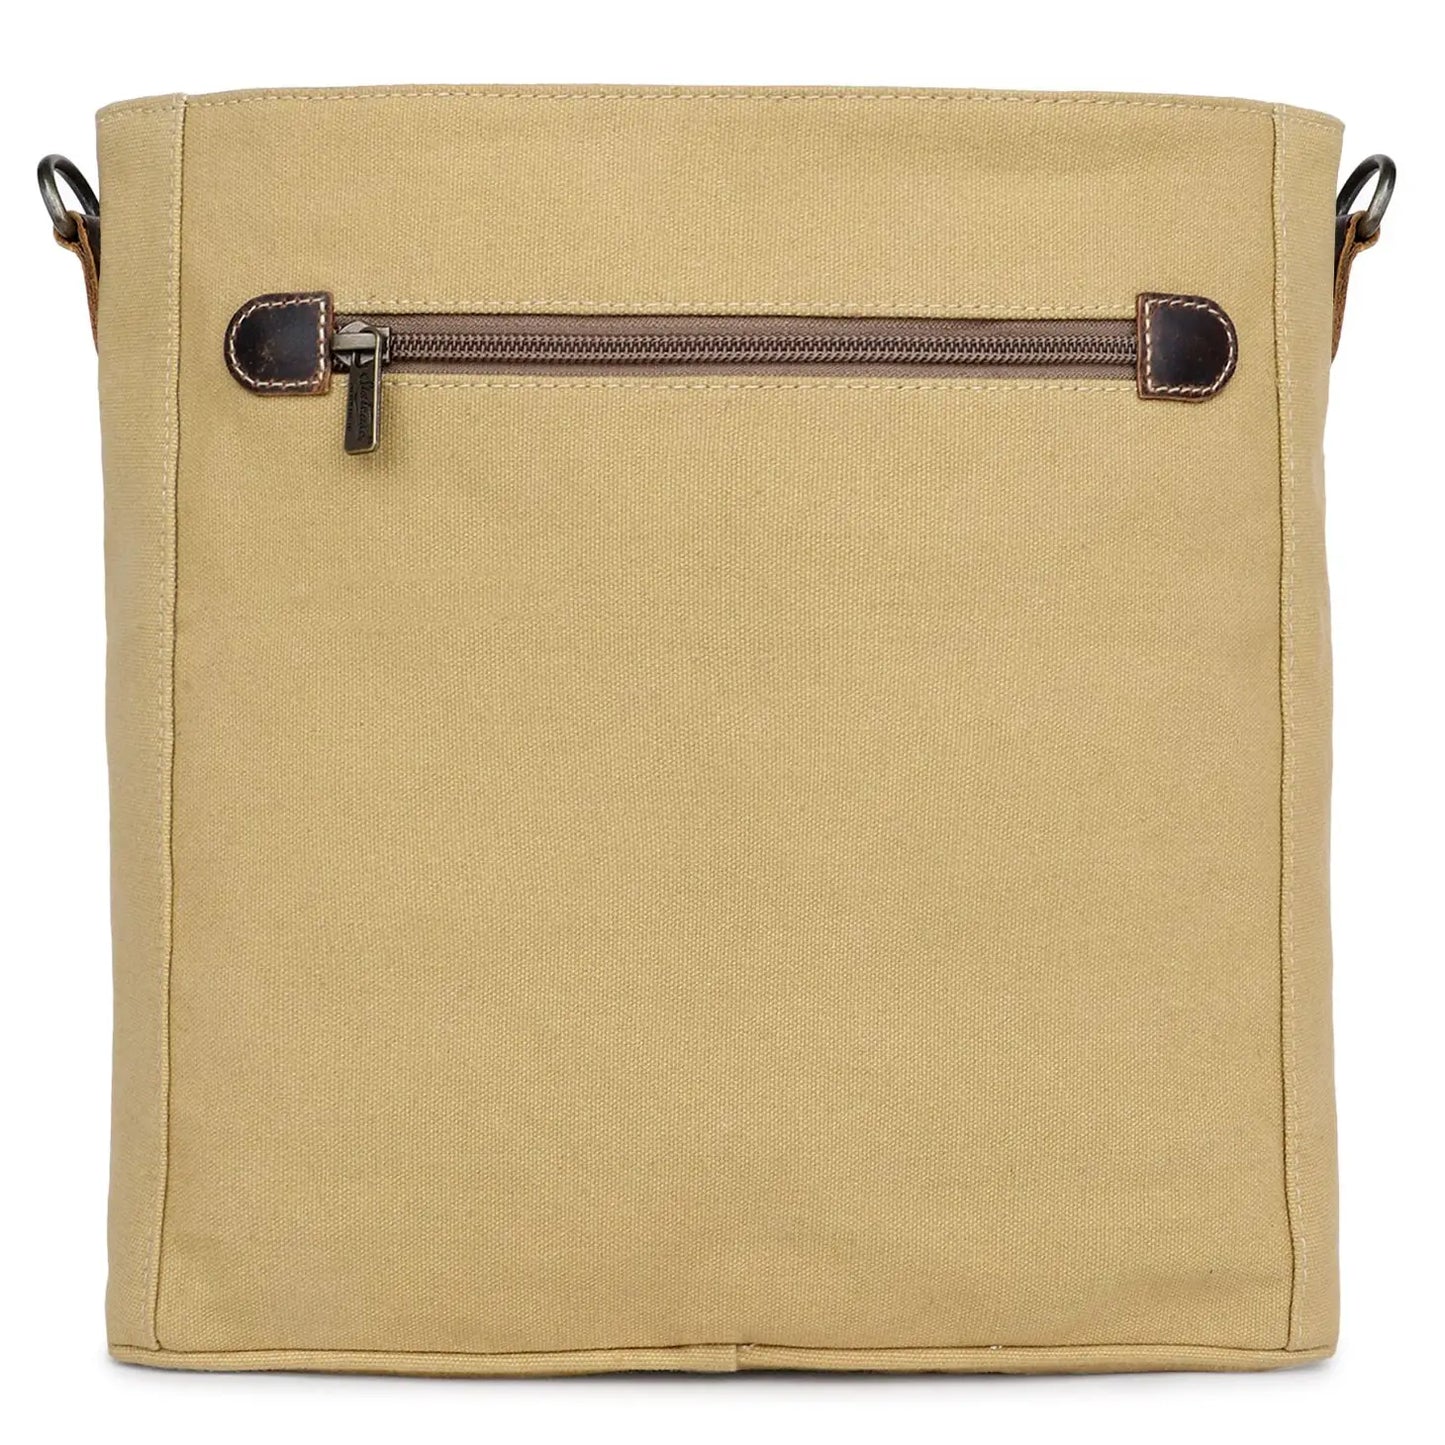 Sixtease Bags USA - The Stacee Crossbody Bag